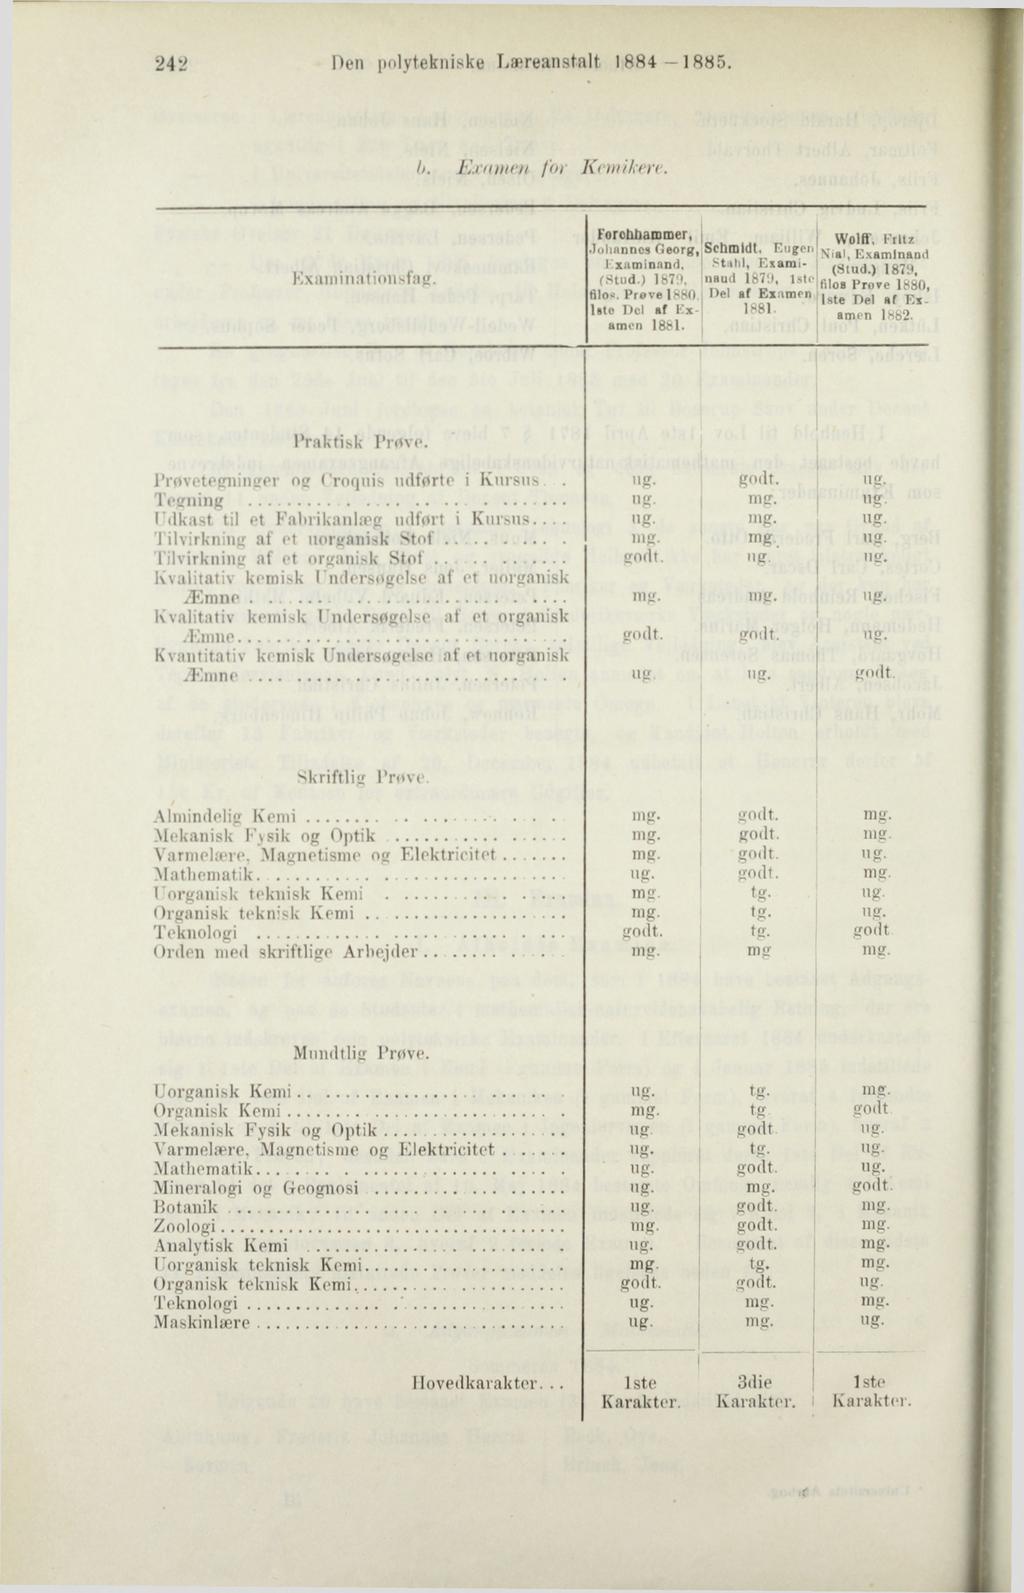 242 Den polytekniske Læreanstalt 1884 1885. I>. Examm for Kemikere. Kxaminationsfag. Forchhammer, Wolff Fritz Johannes fieorg, Schmidt. Enge.